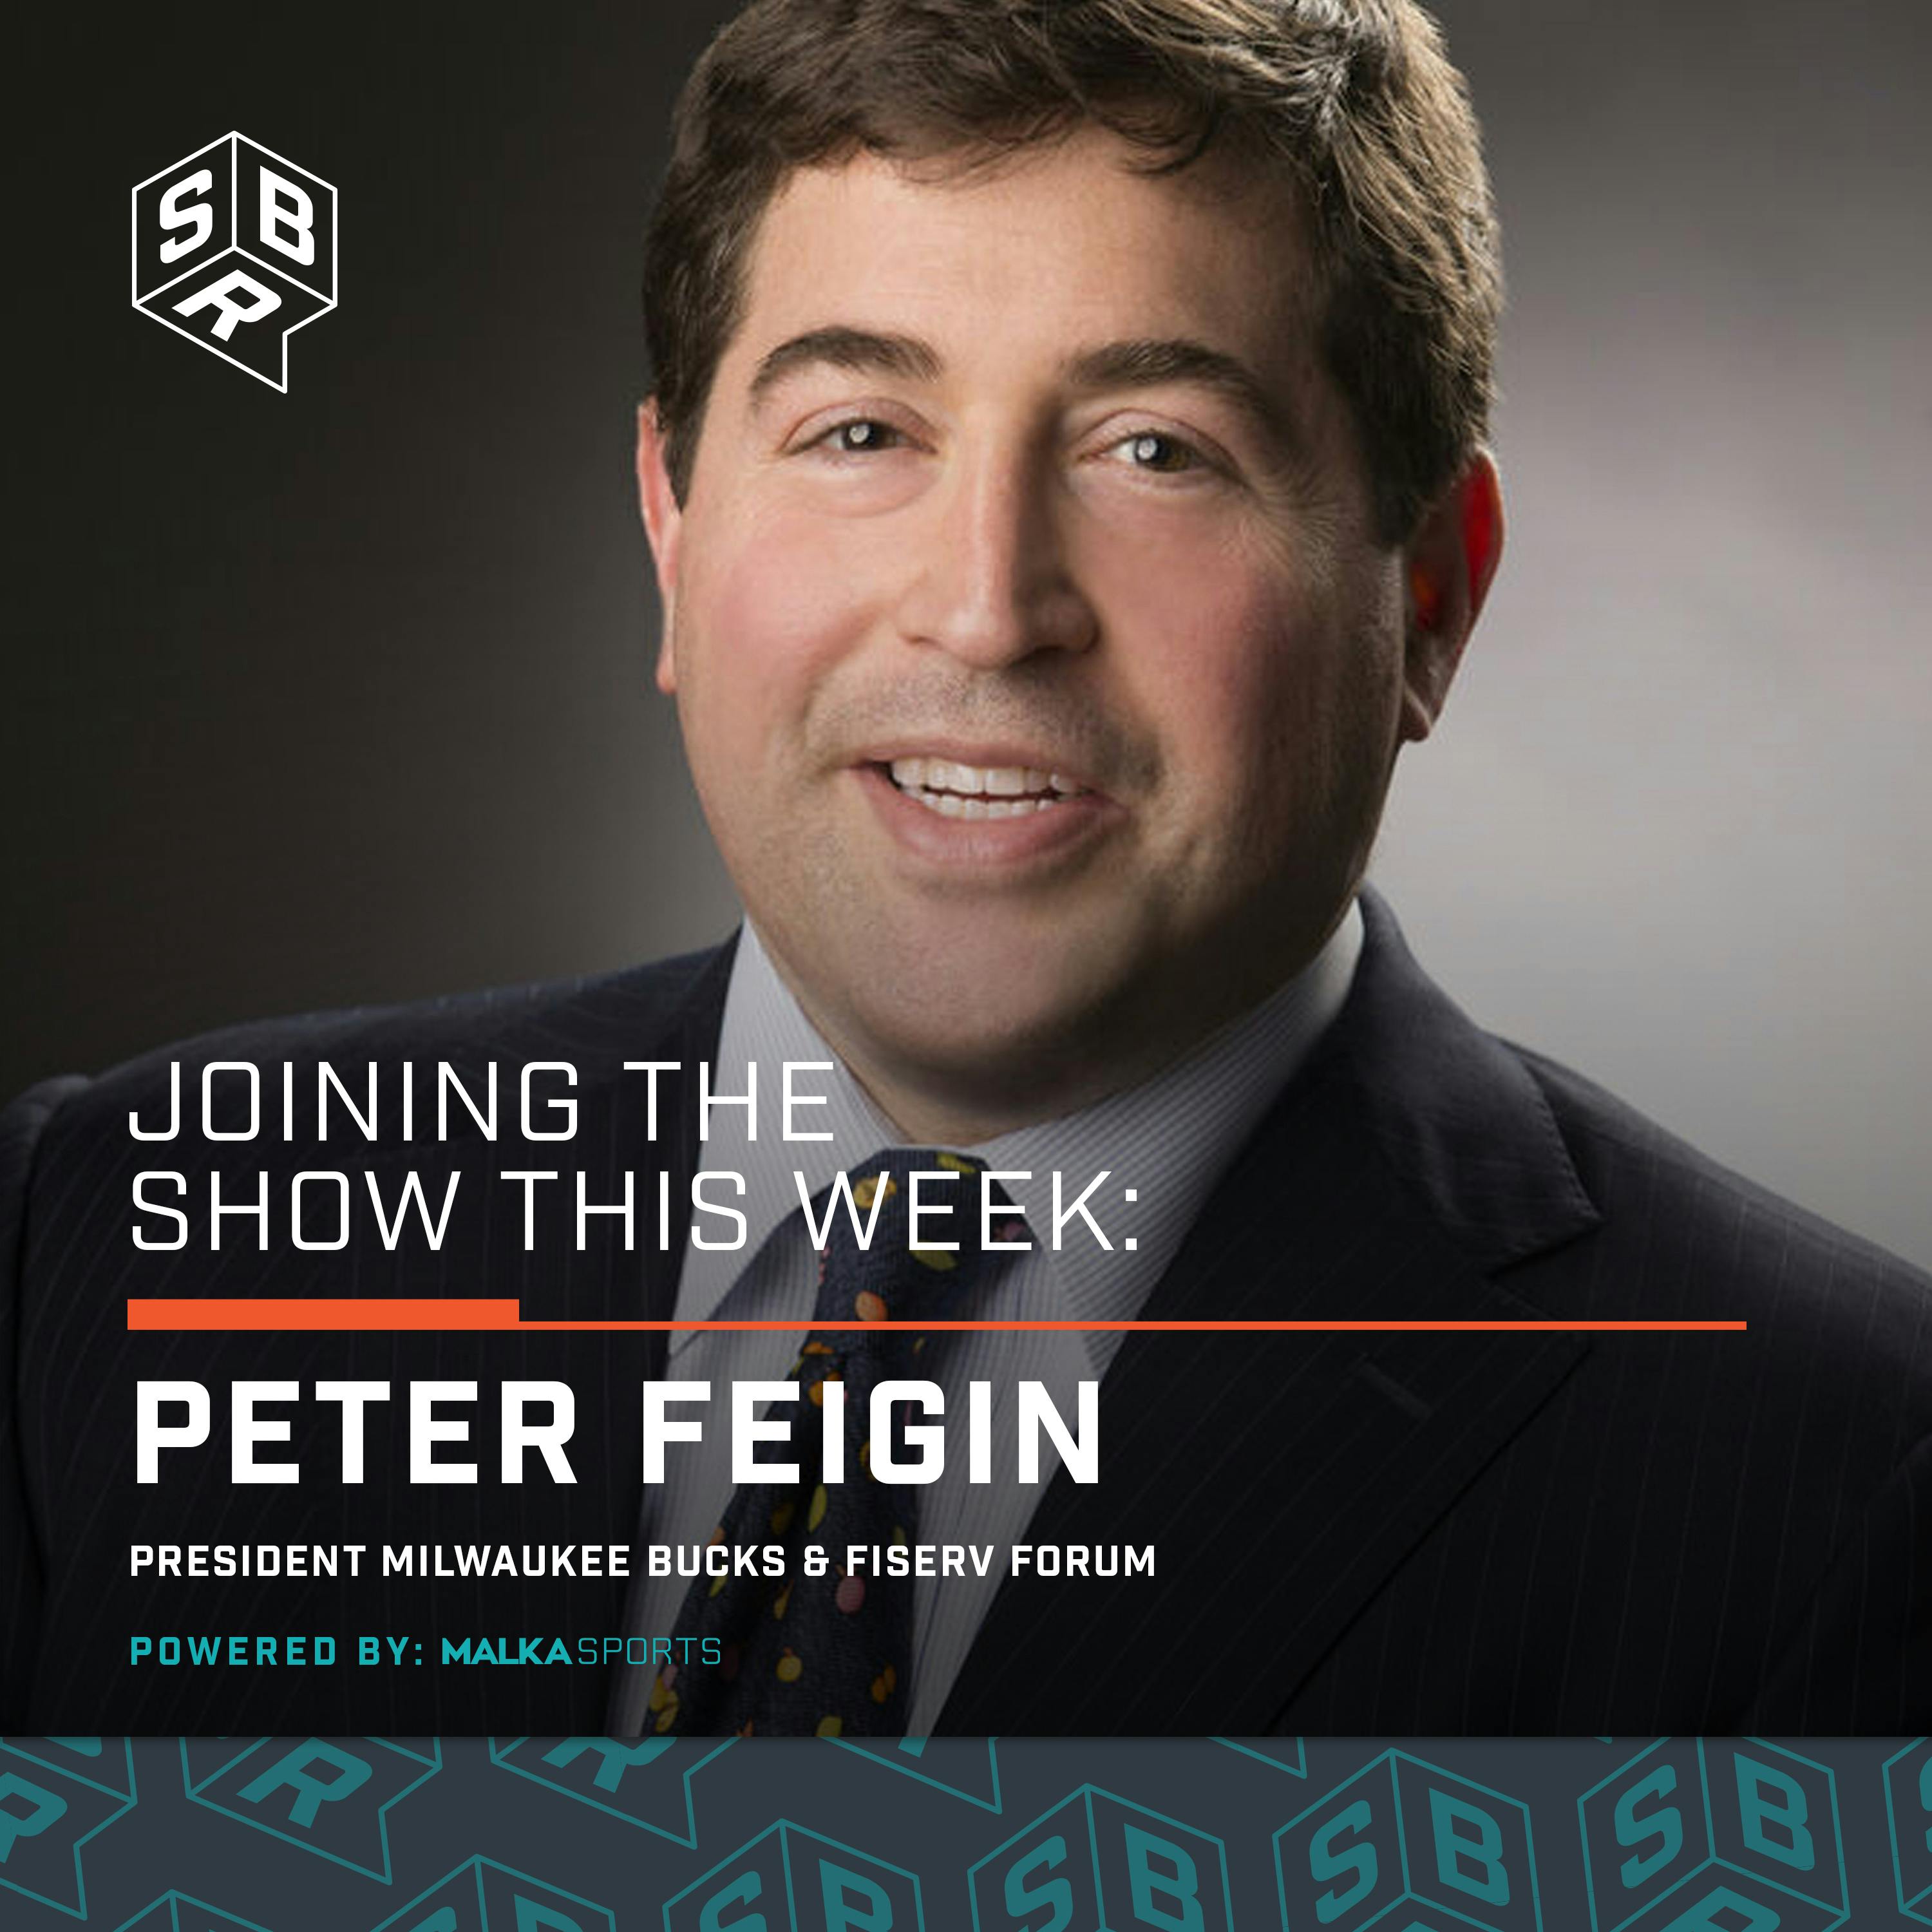 Peter Feigin (@PFeigin) - President of the NBA’s Milwaukee Bucks